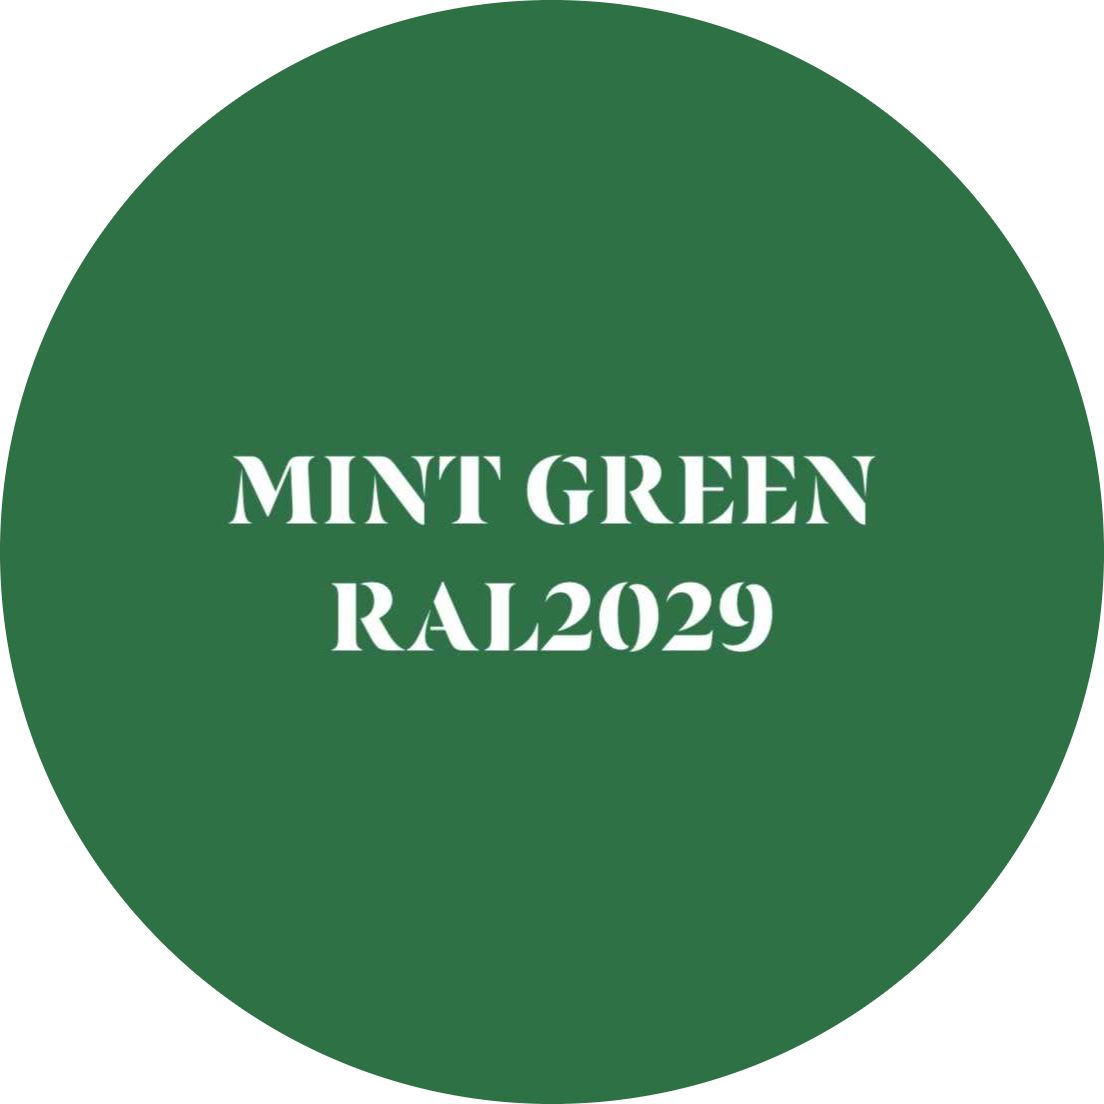 Mint Green Ral2029 Professional PU350 Polyurethane Floor Paint